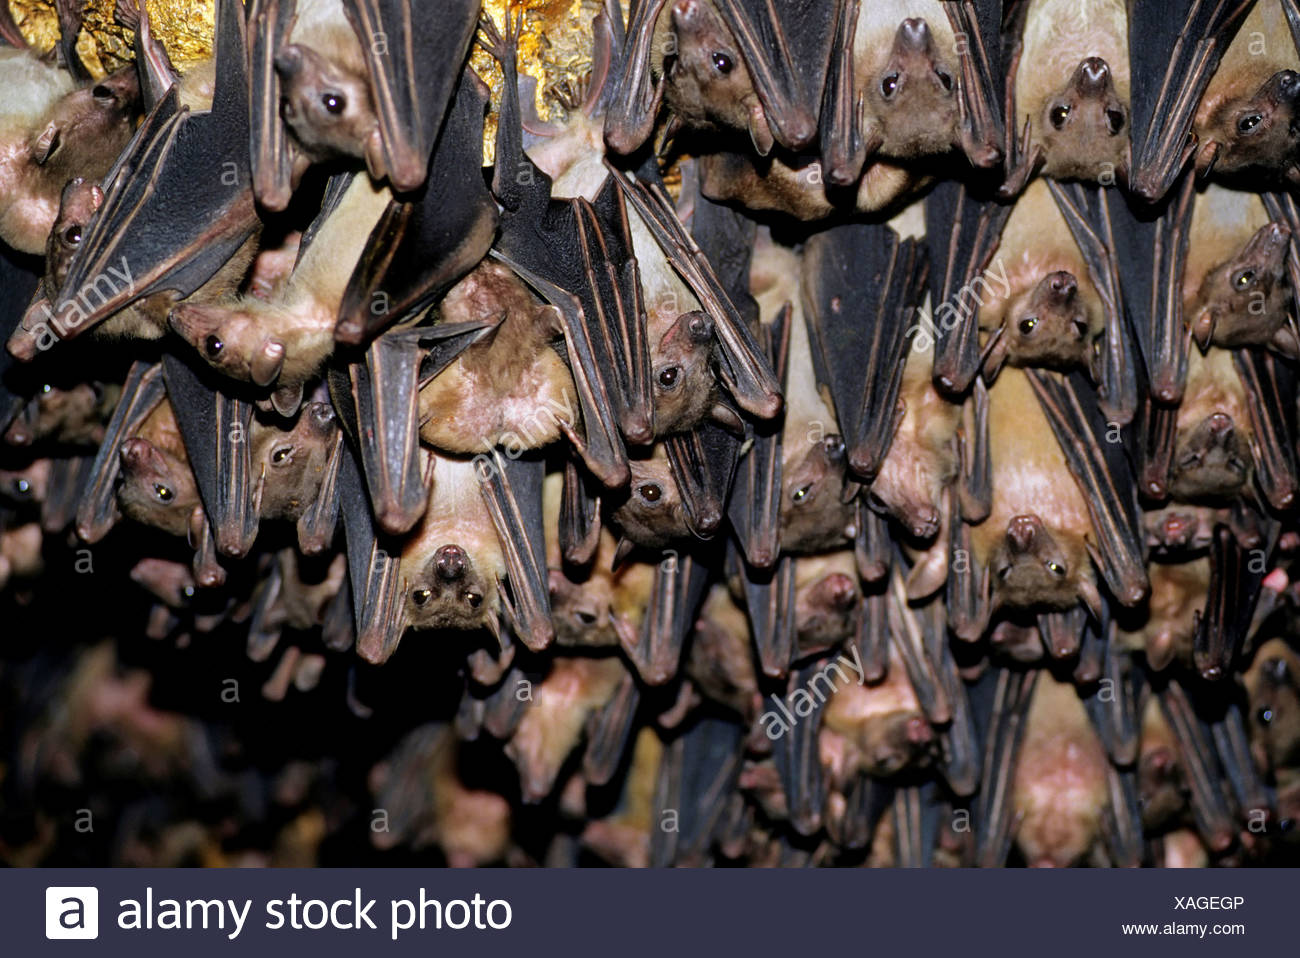 Uganda Queen Elizabeth National Park Bat Cave Bats Hanging From